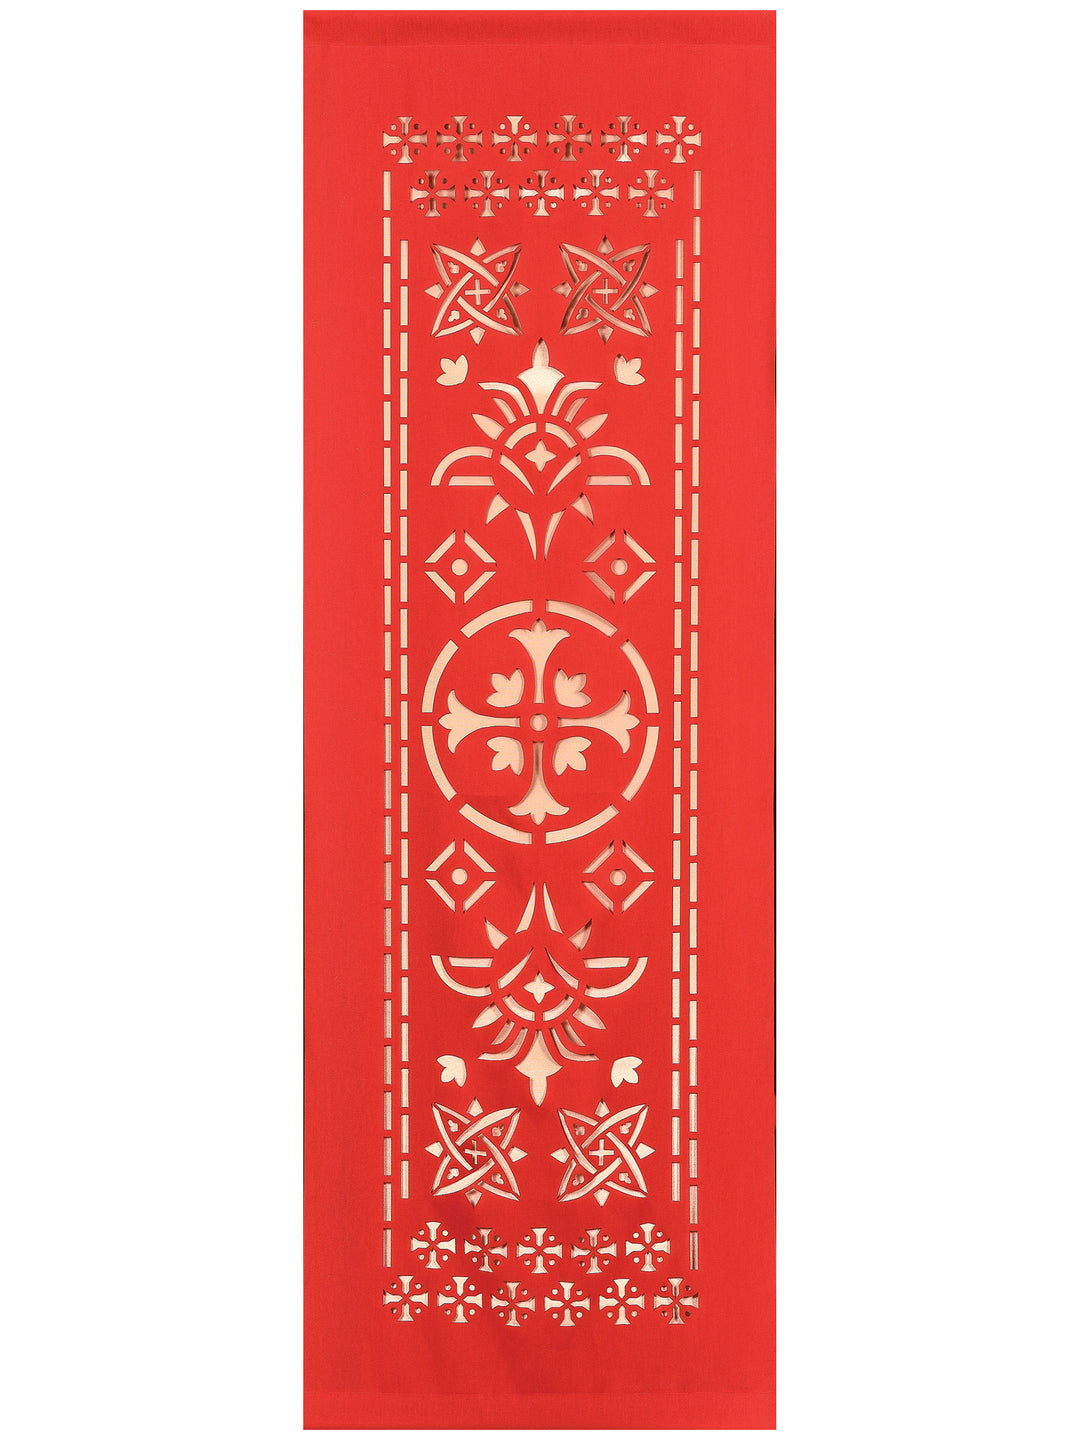 Ecclesiastical Cross Banner - Liturgical Banners - PraiseBanners